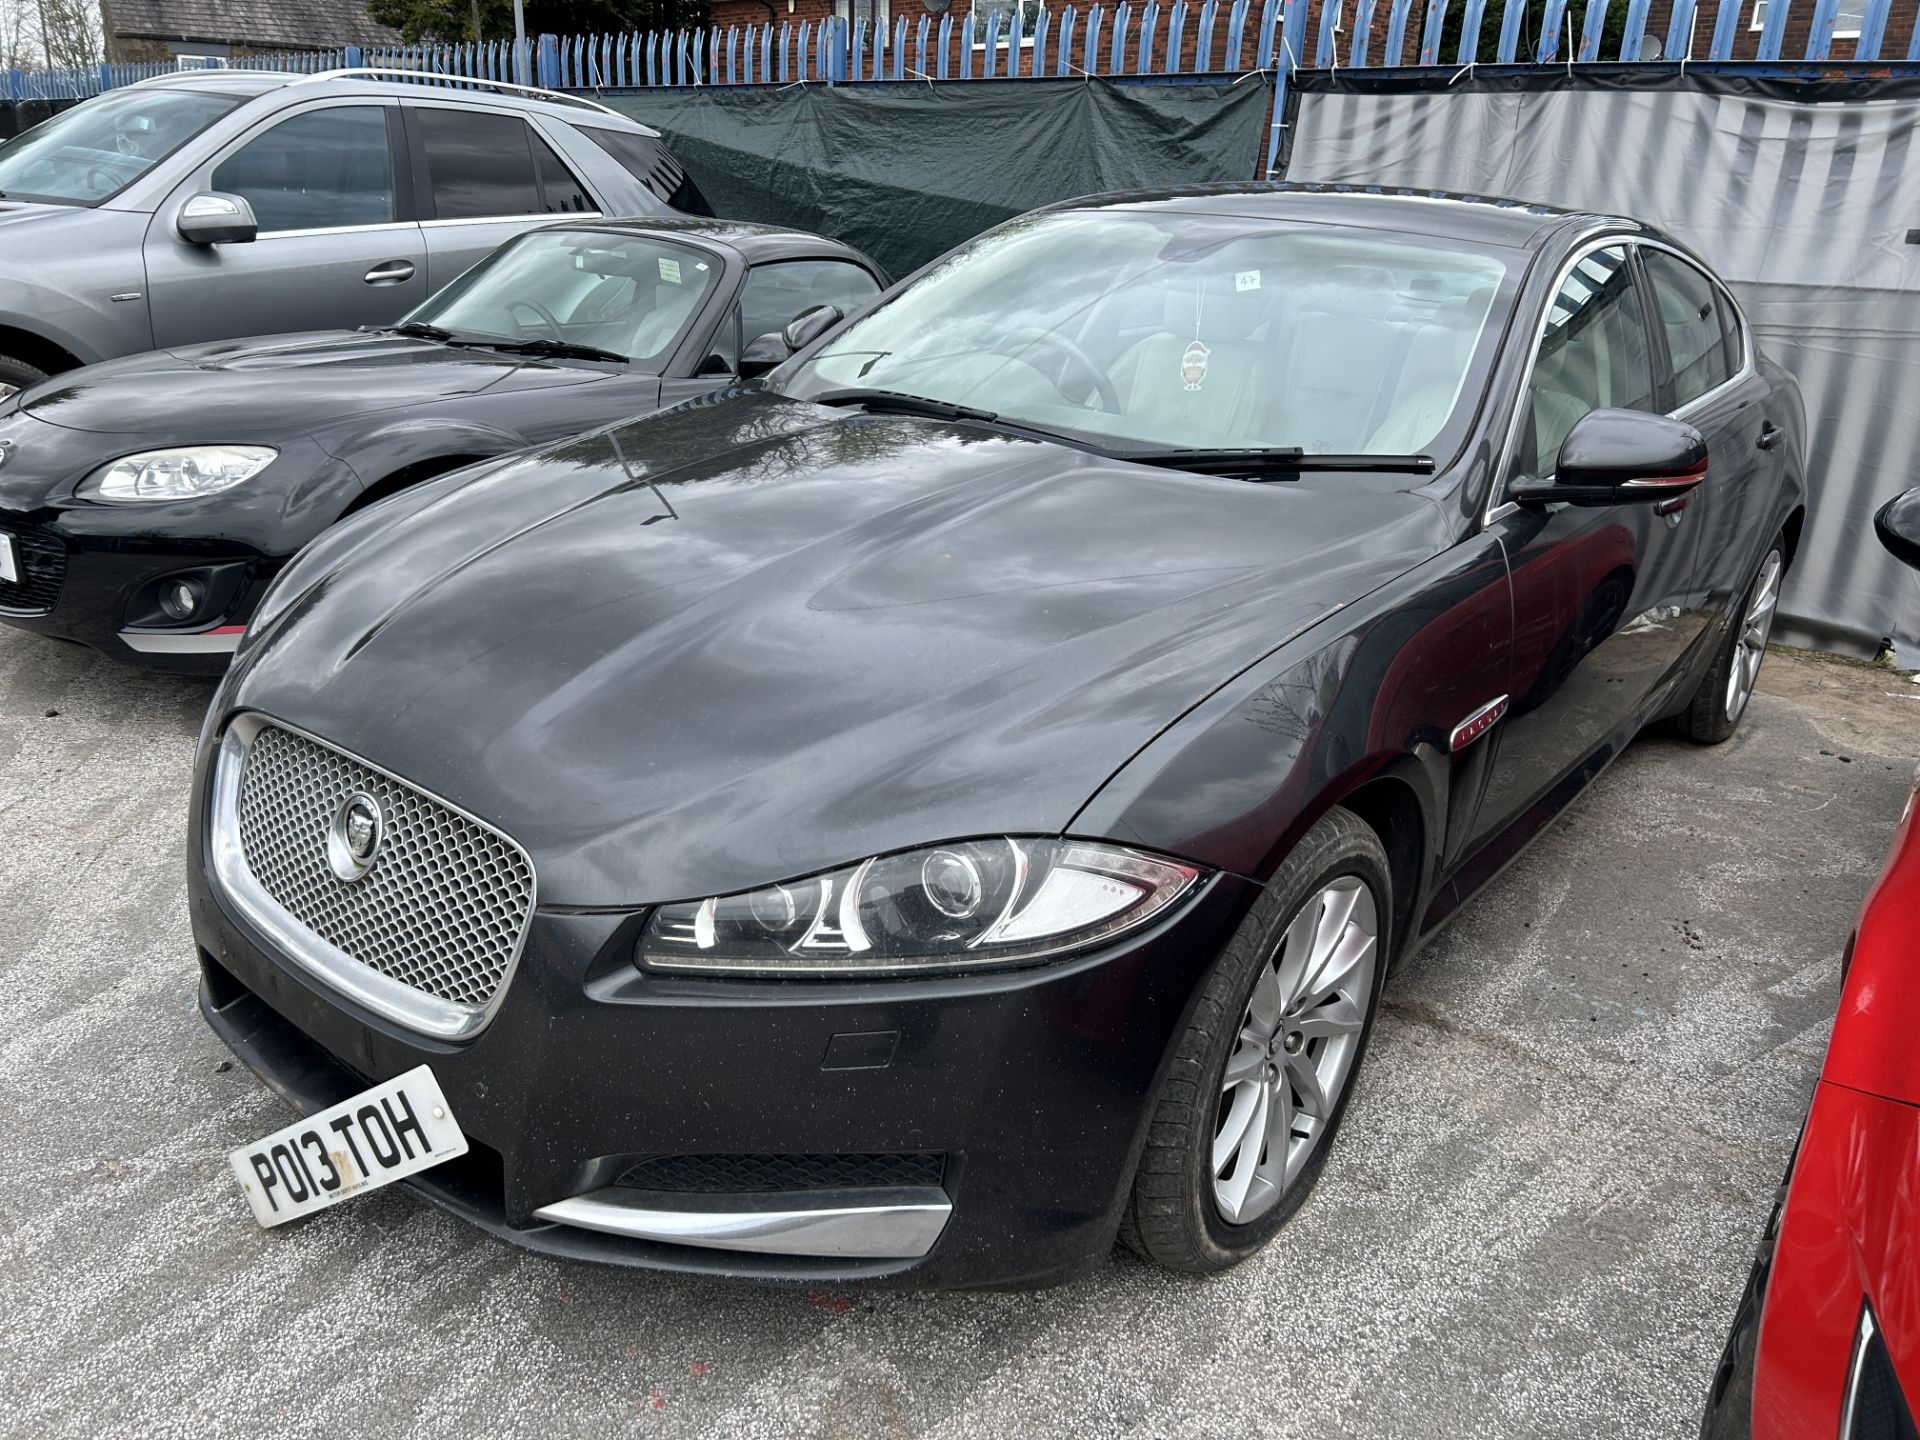 Jaguar XF Premium Luxury D Auto Diesel 4 Door Saloon | PO13 TOH | 165,697 Miles - Image 3 of 9